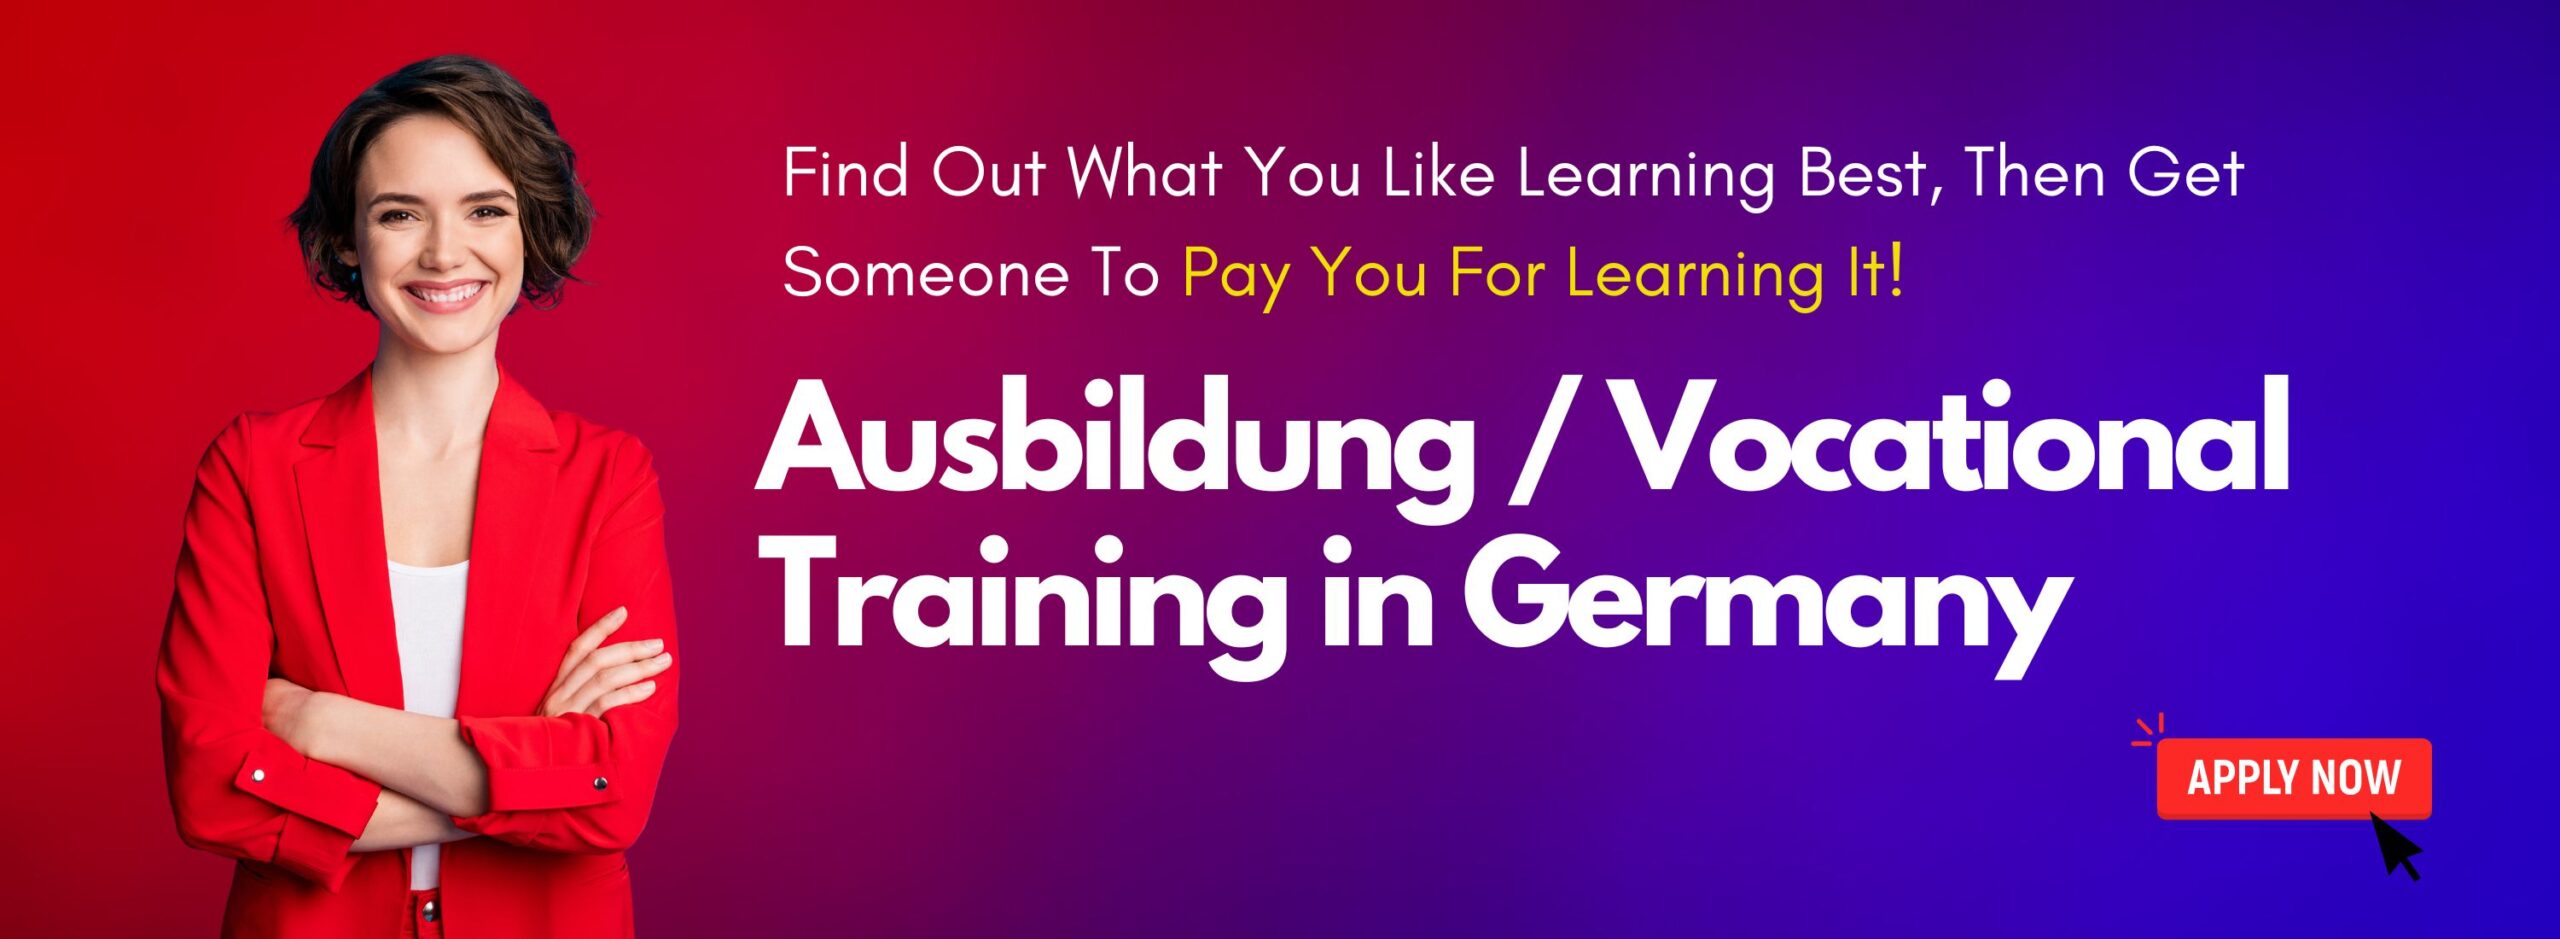 Ausbildung Vocational Training in Germany.-KCR CONSULTANTS